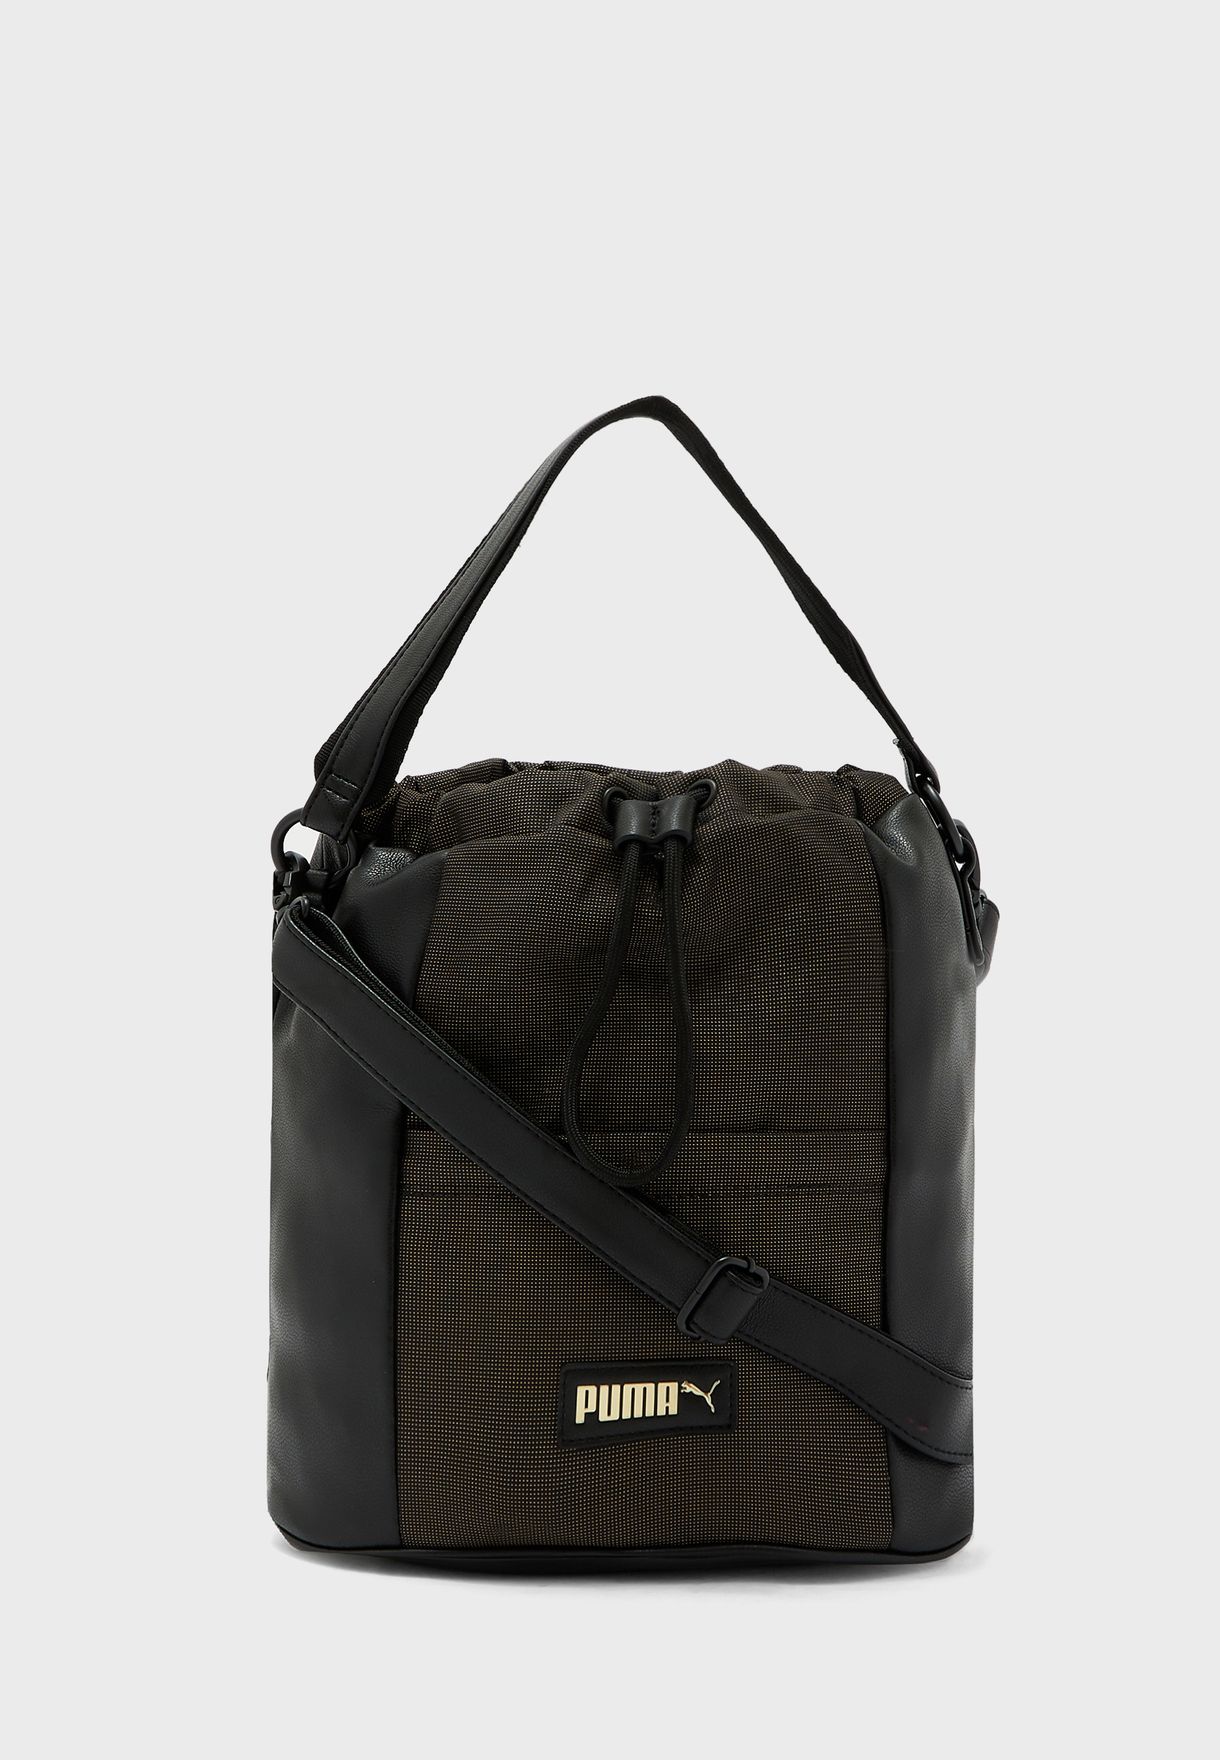 puma prime premium handbag